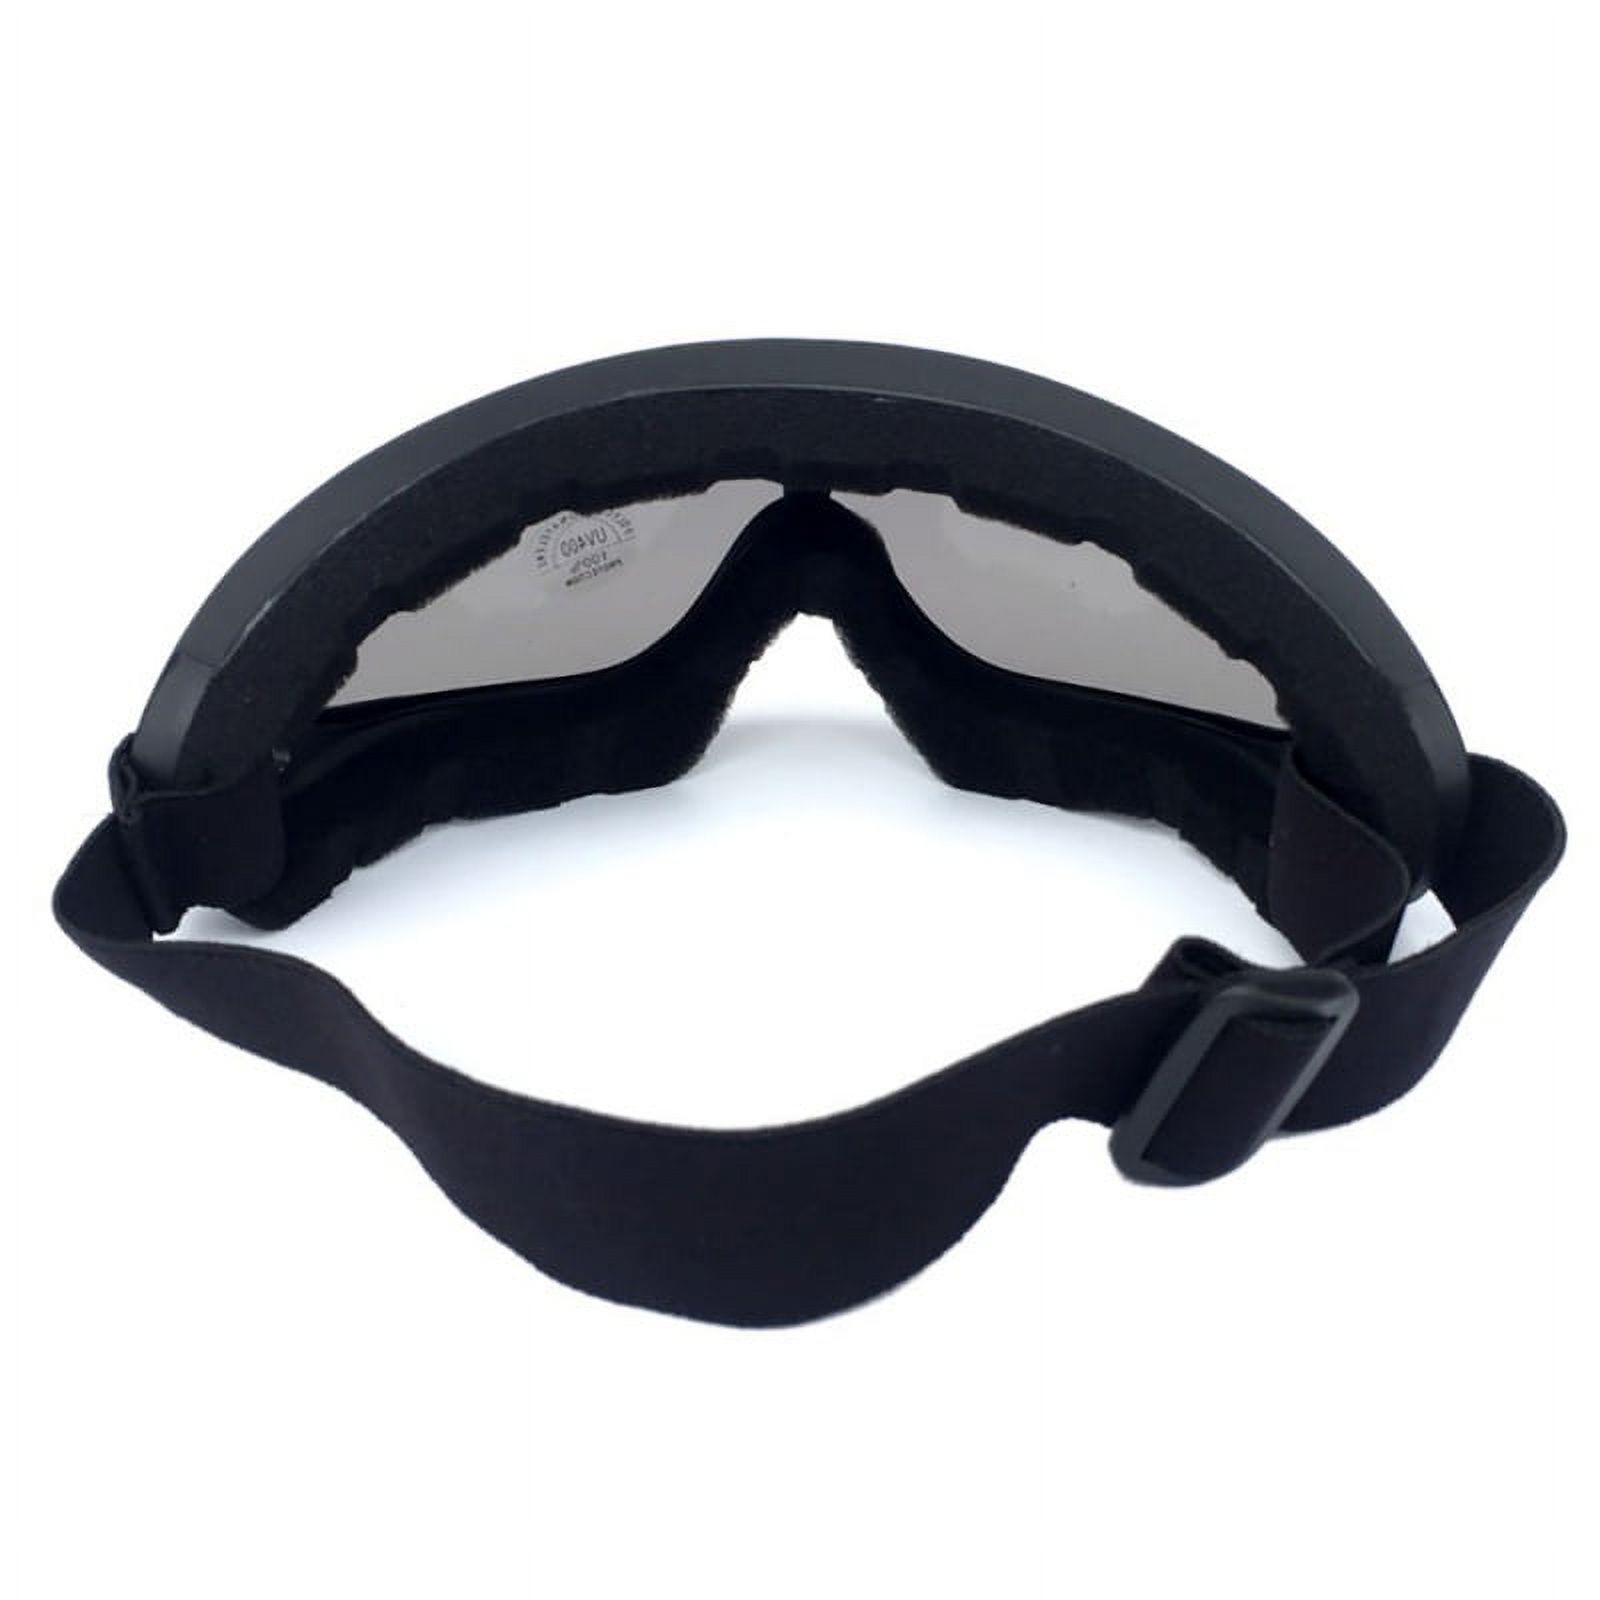 Skiing Goggles Women Men PC UV 400 Protective Lens Windproof Dust-proof Adjustable Sports Glasses Eyewear Motorcycle Jet Ski Sport Snowboard Goggles Sunglass - image 3 of 4